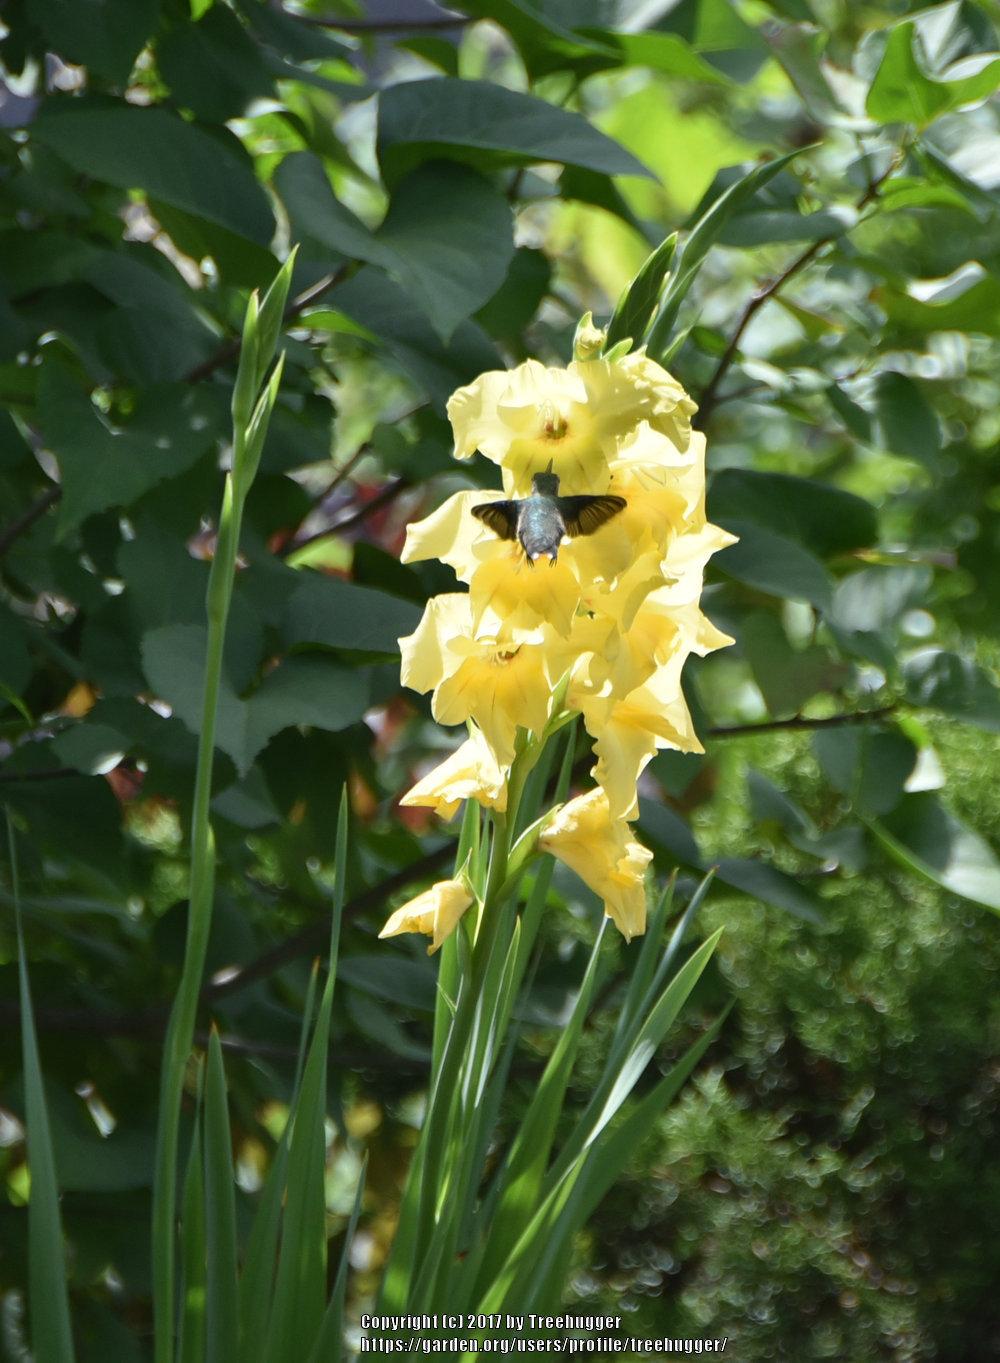 Photo of Gladiola (Gladiolus) uploaded by treehugger